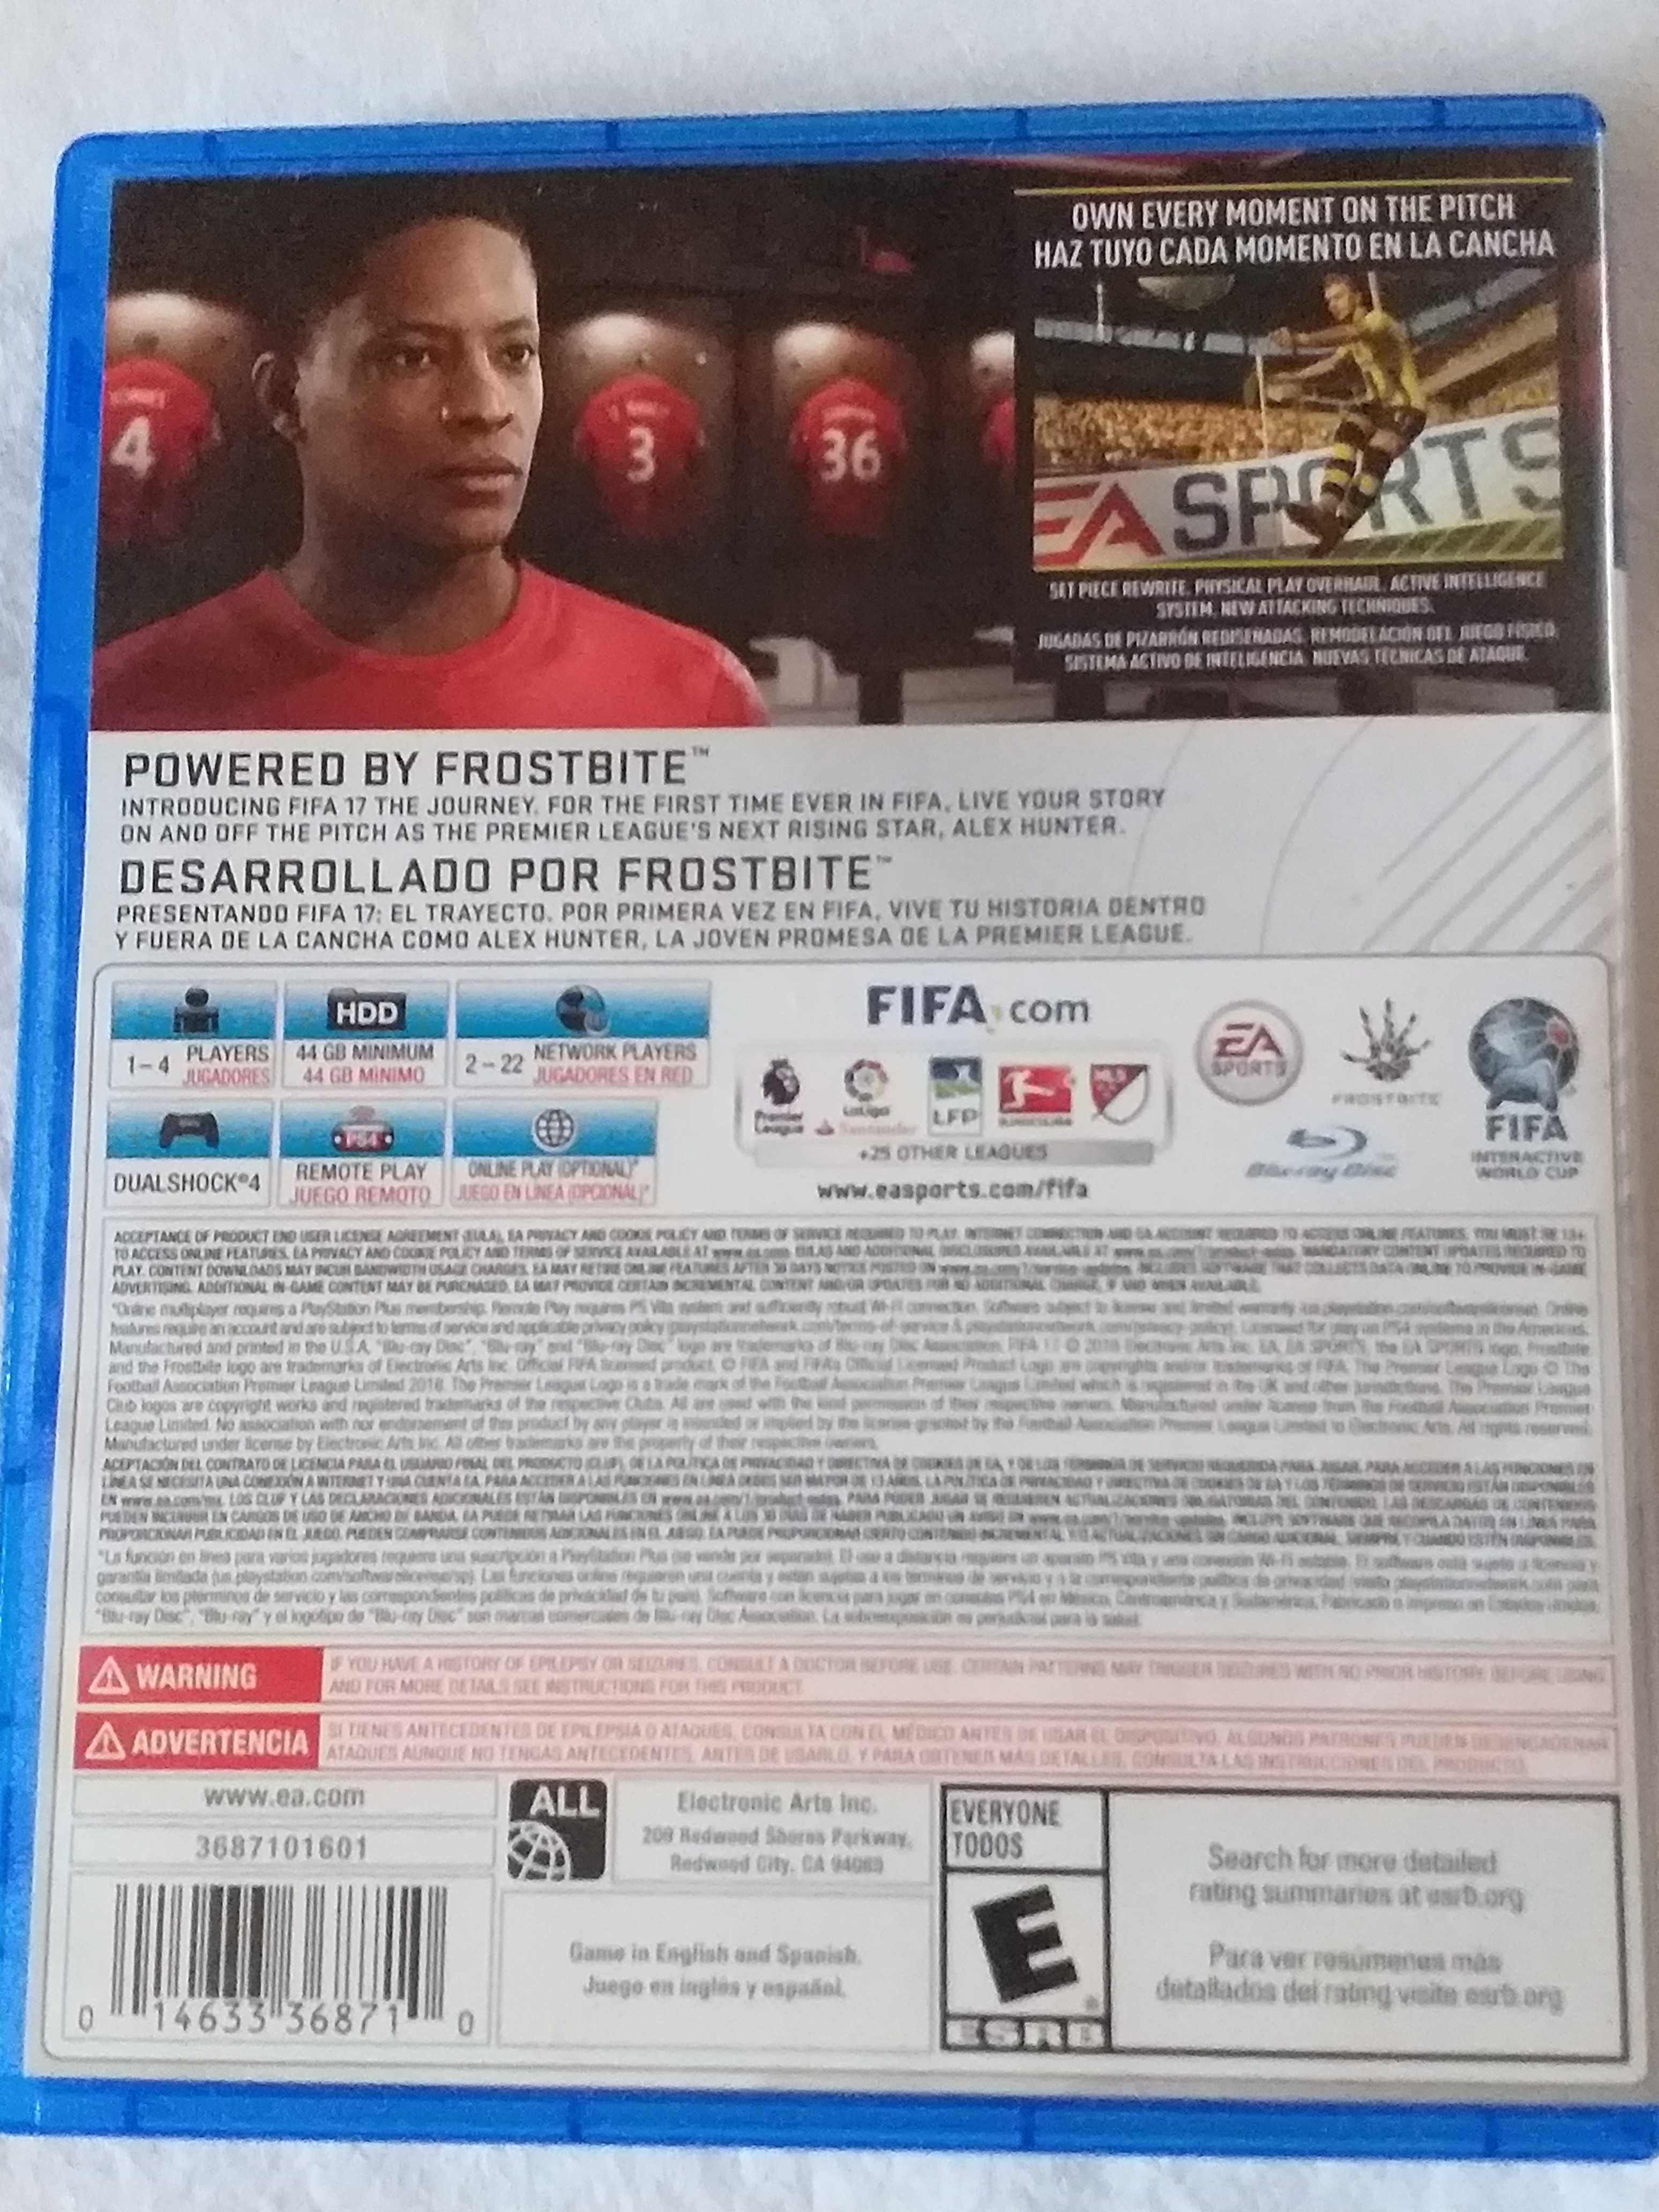 Gra na konsole PS4 FIFA 17